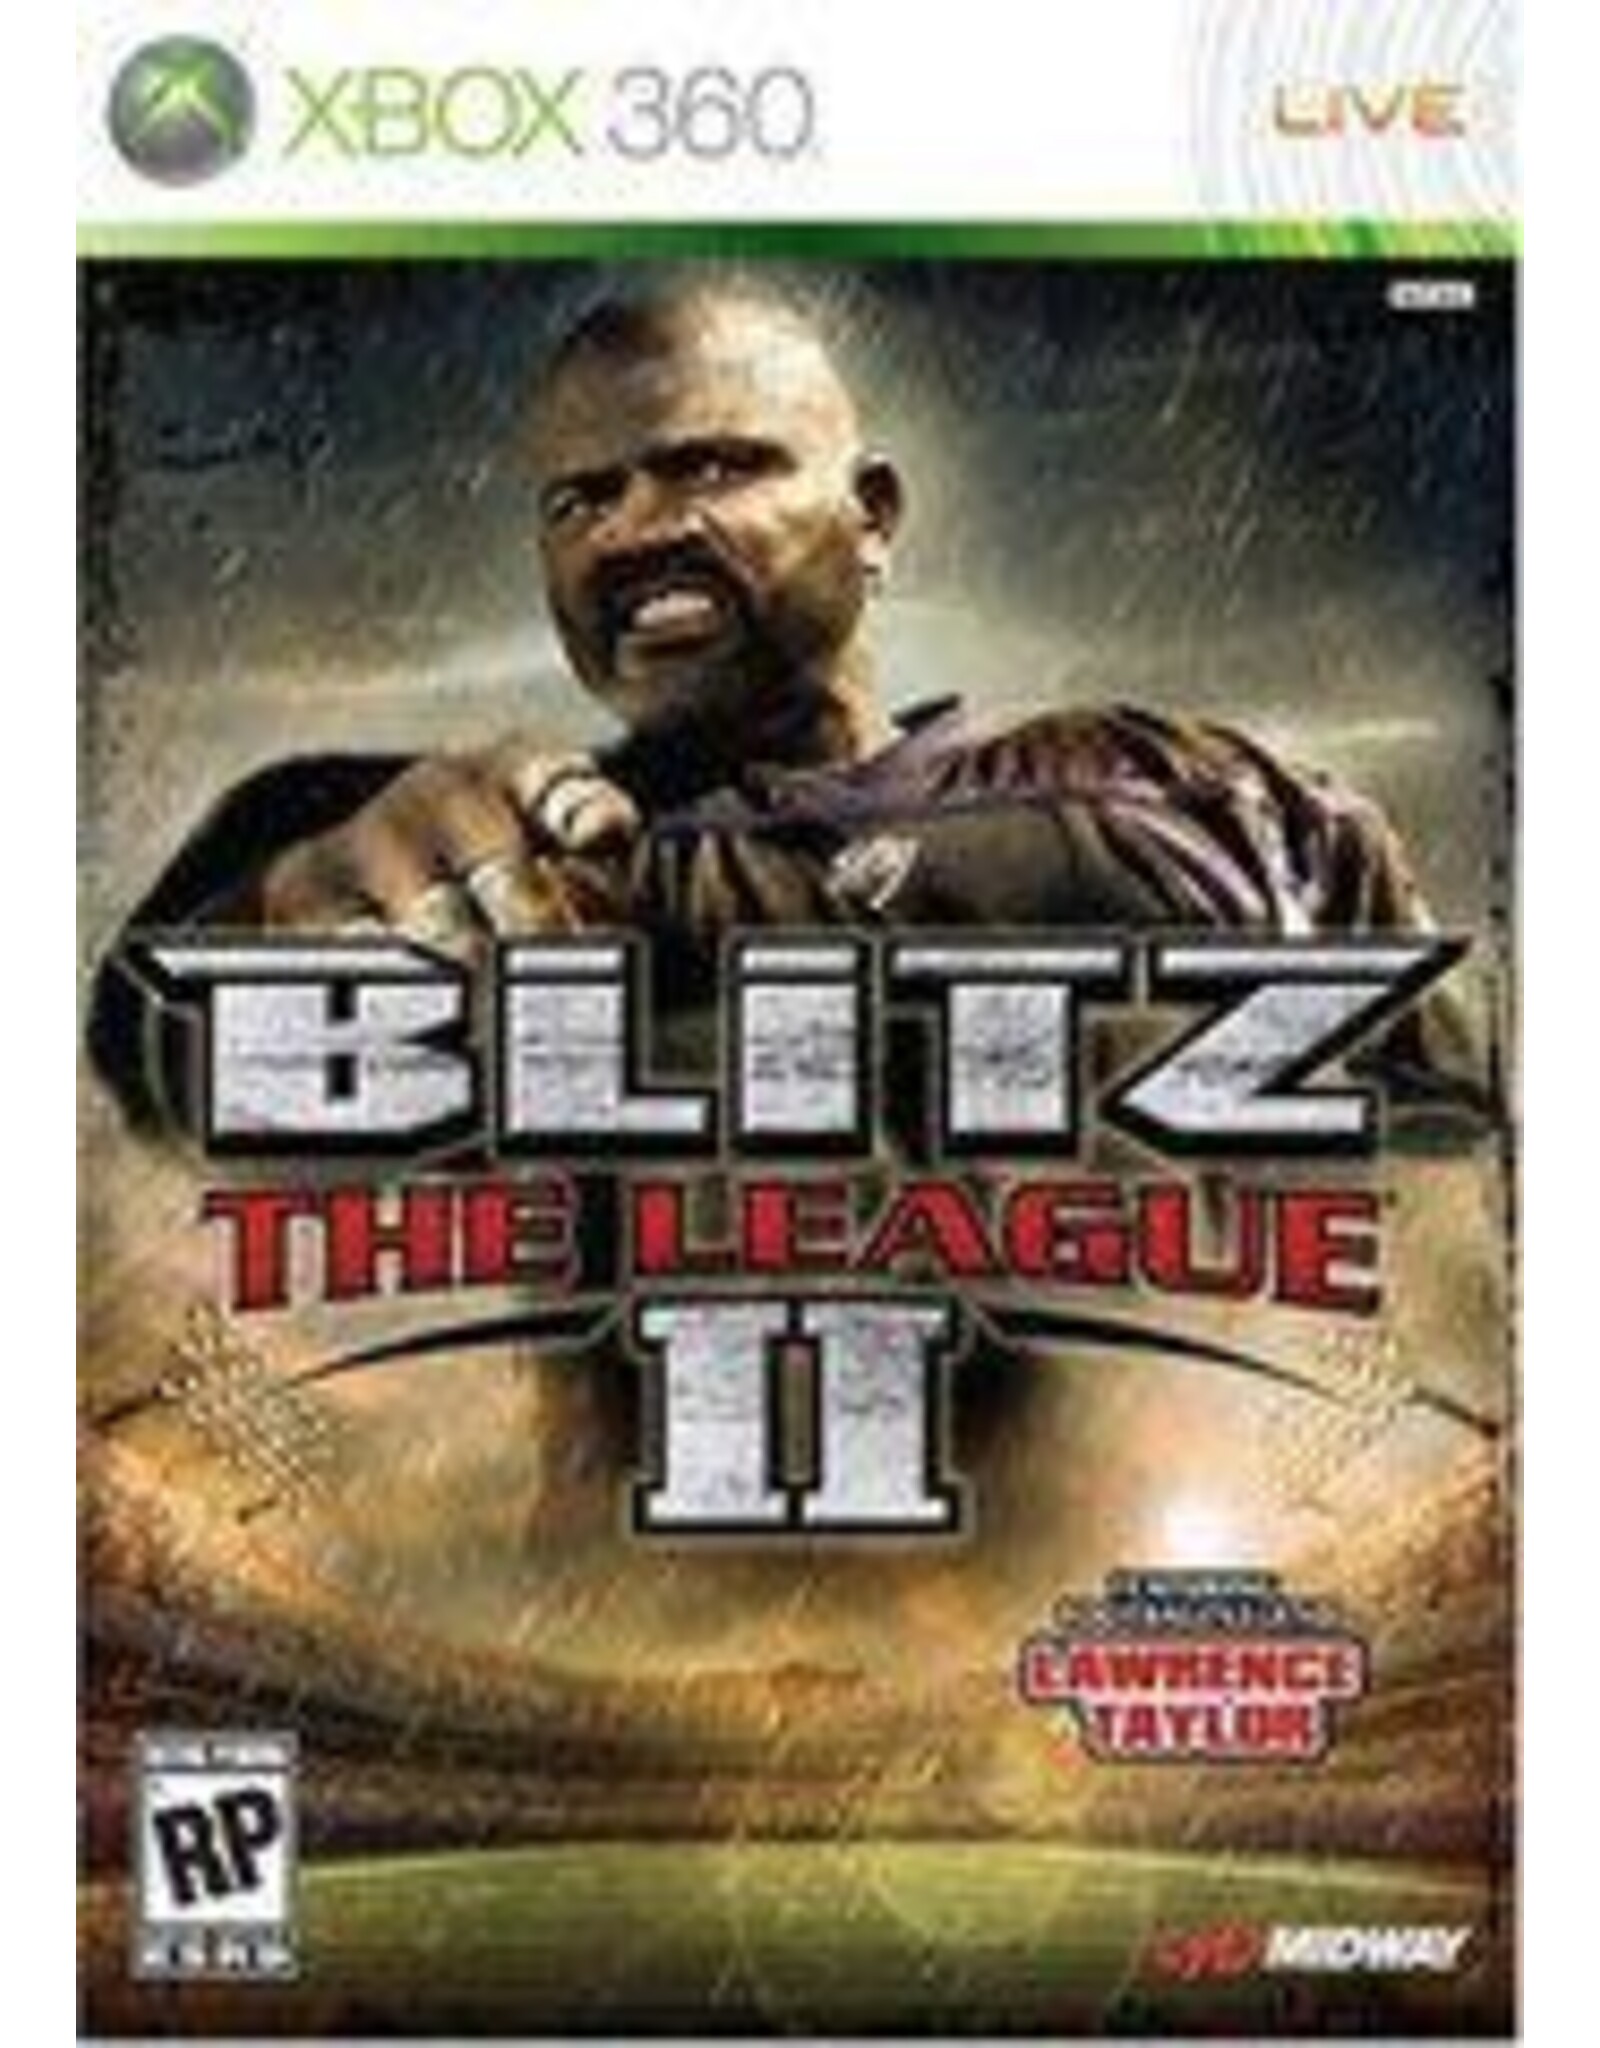 Xbox 360 Blitz The League II (Used, Cosmetic Damage)